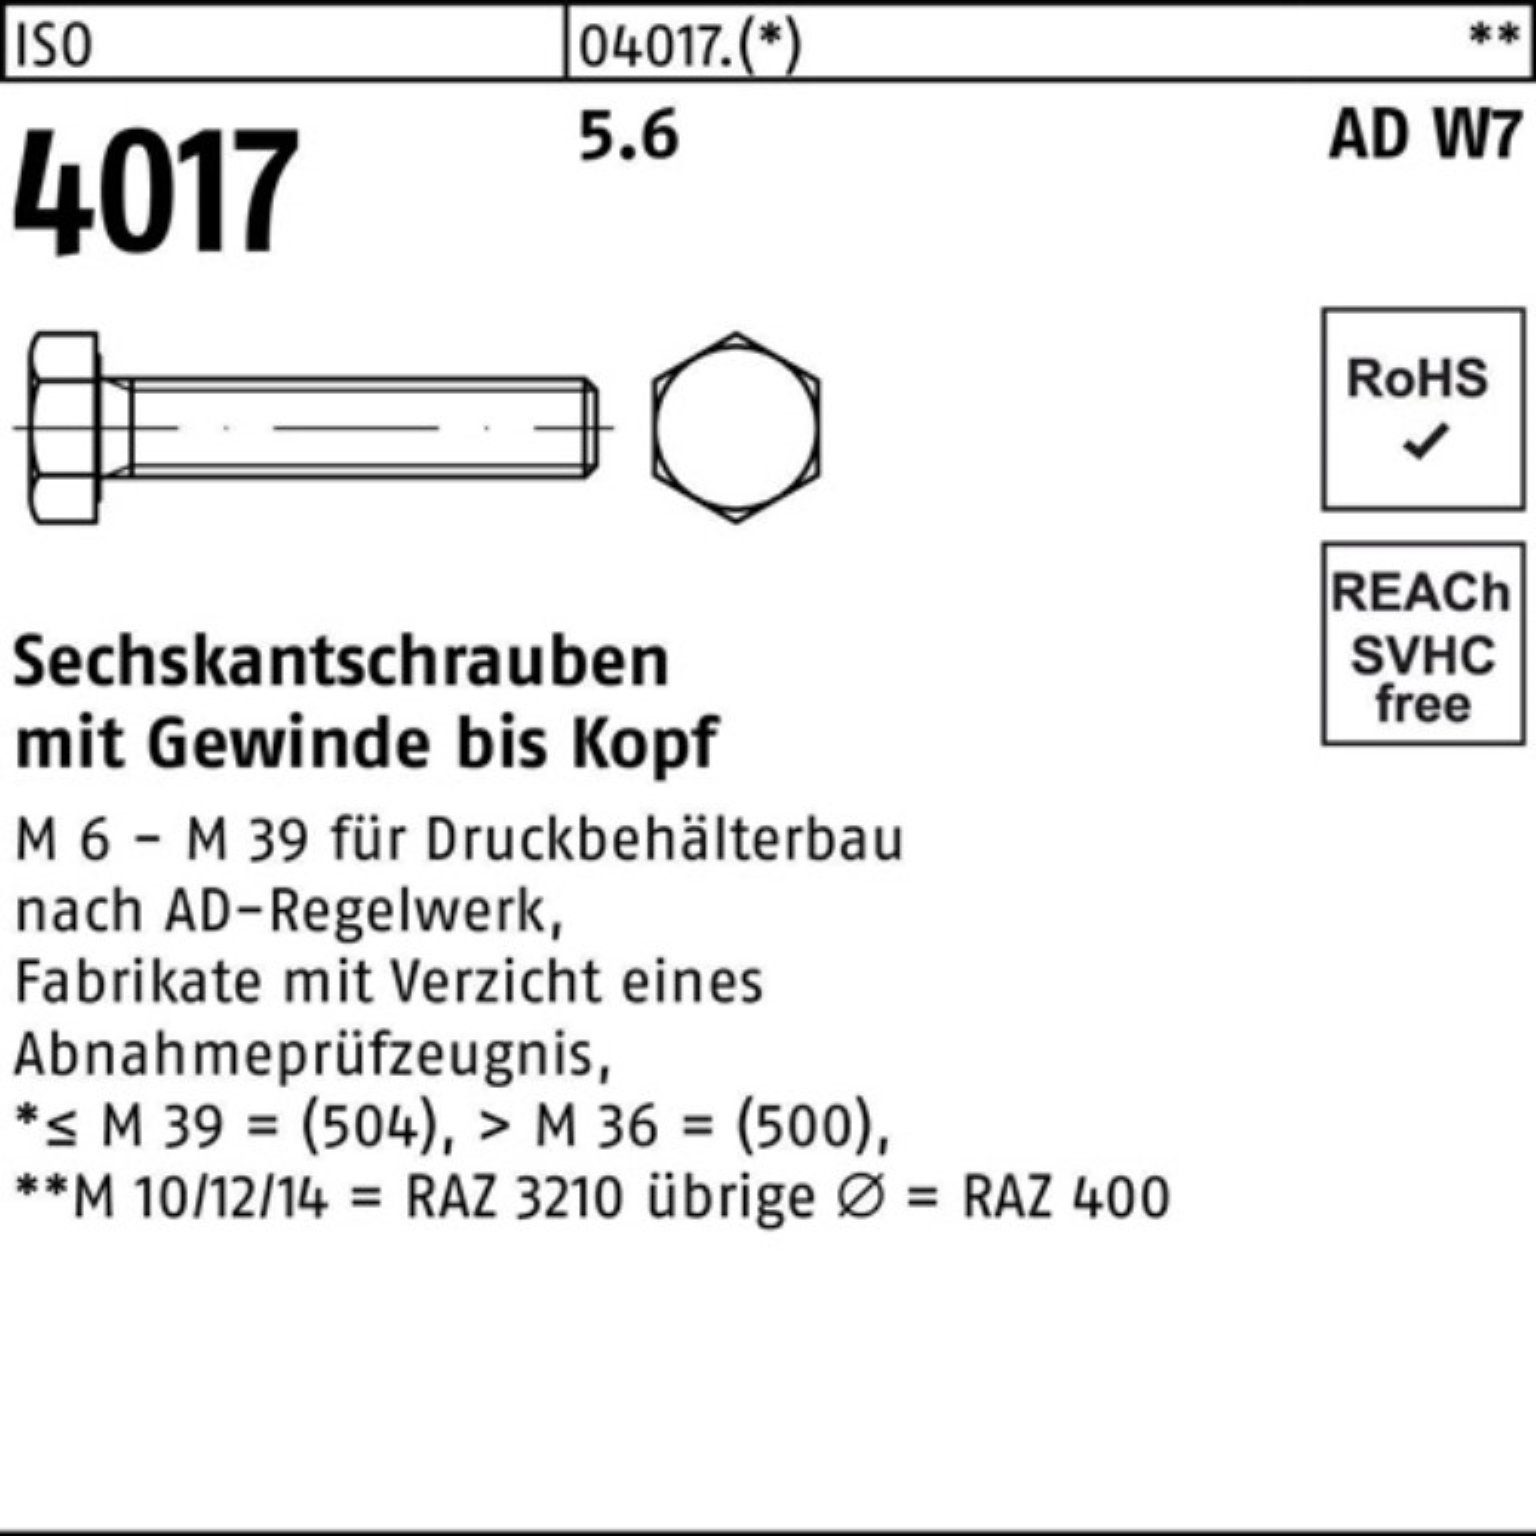 Bufab Sechskantschraube 100er Pack Sechskantschraube ISO 4017 VG M12x 110 5.6 AD W7 50 Stück